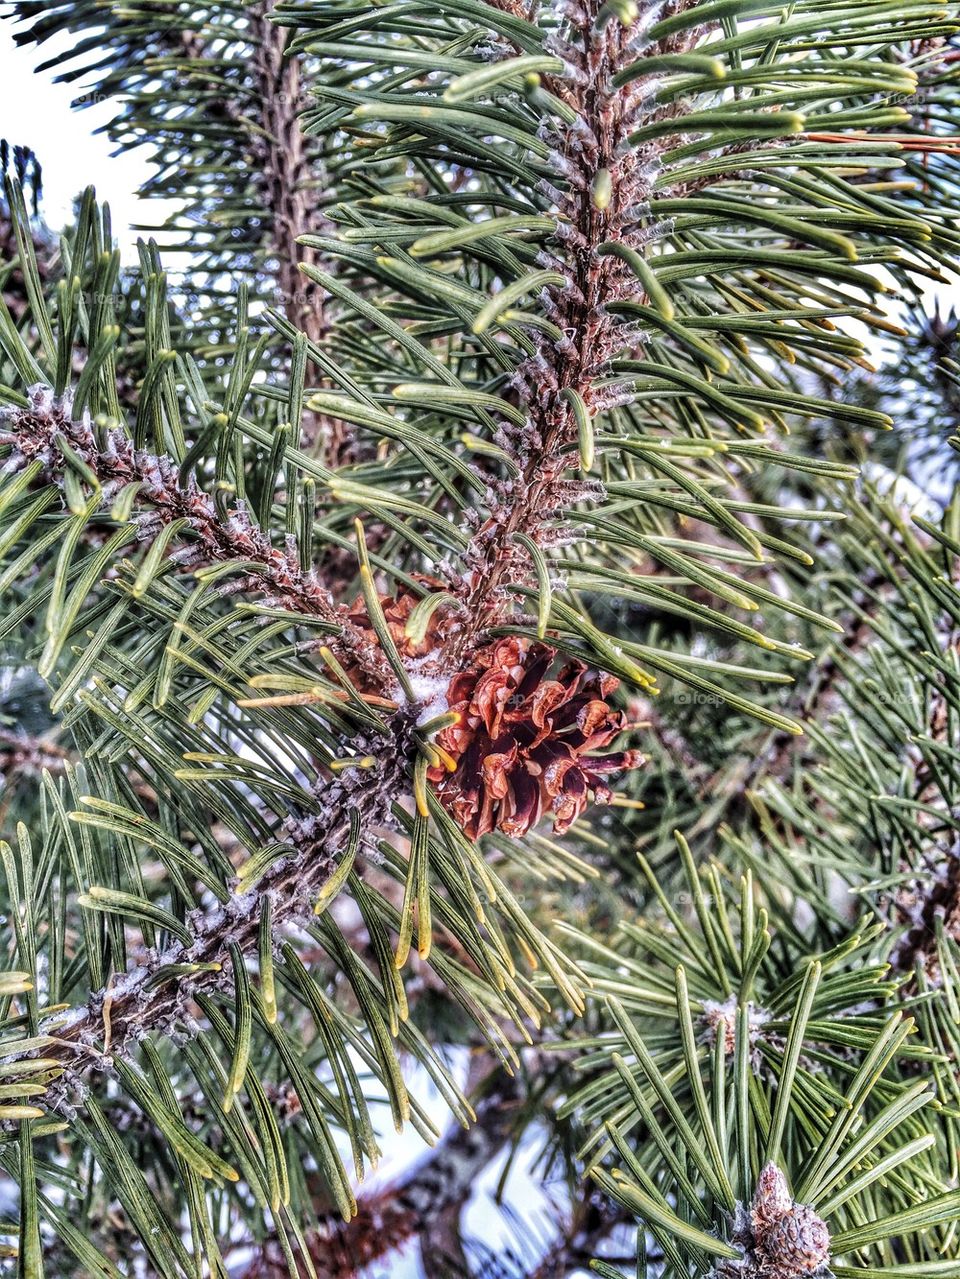 Winterized pine tree